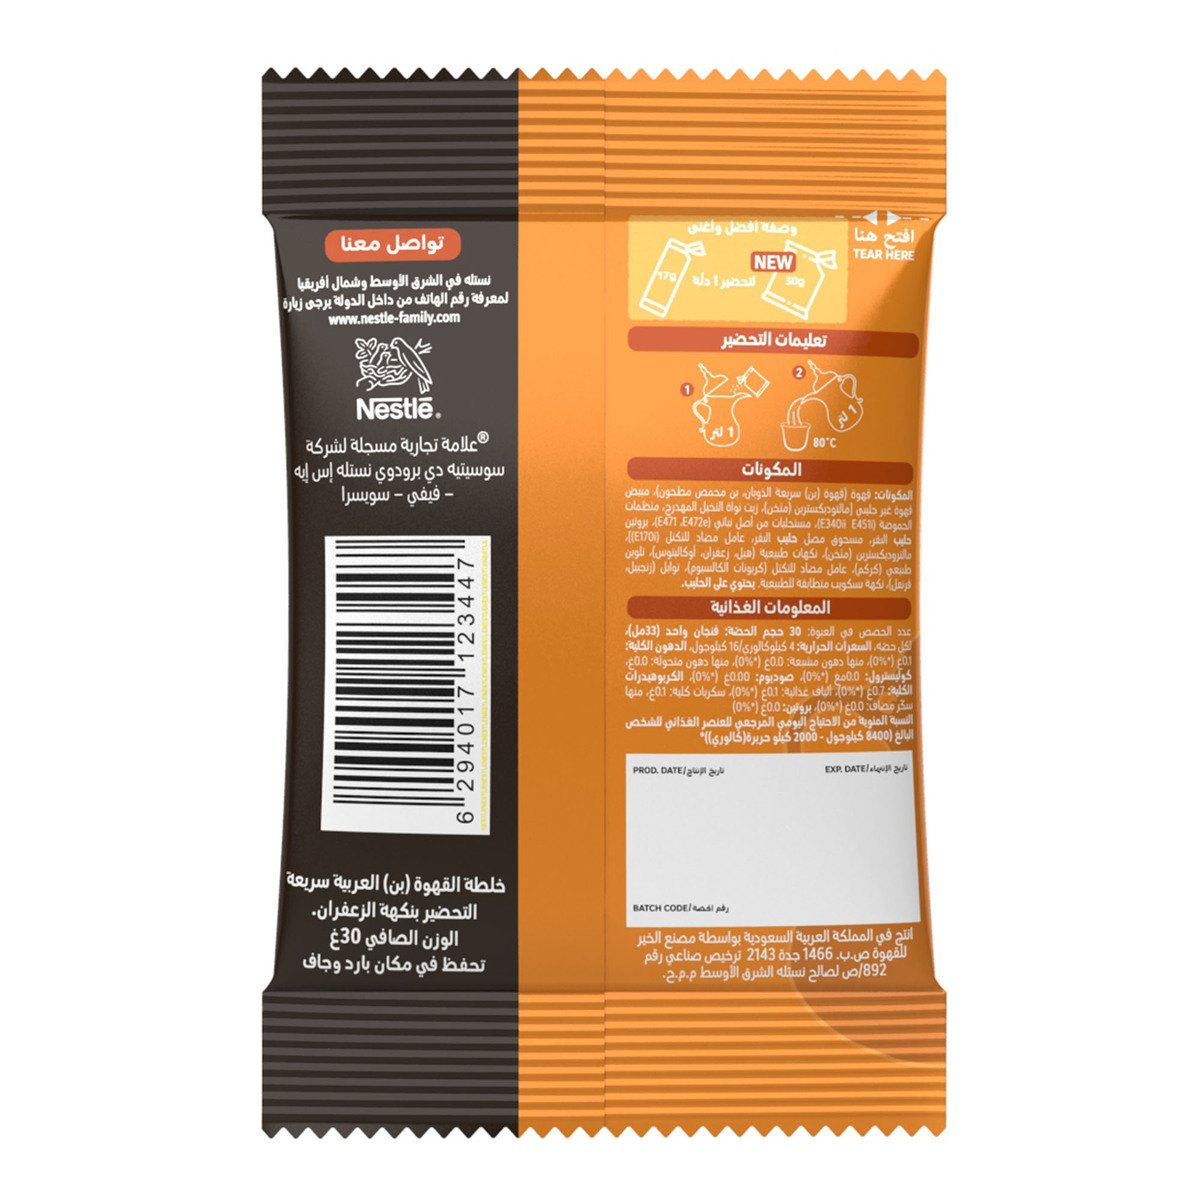 Nestle Nescafe Arabiana Saffron Flavour 10 x 30 g